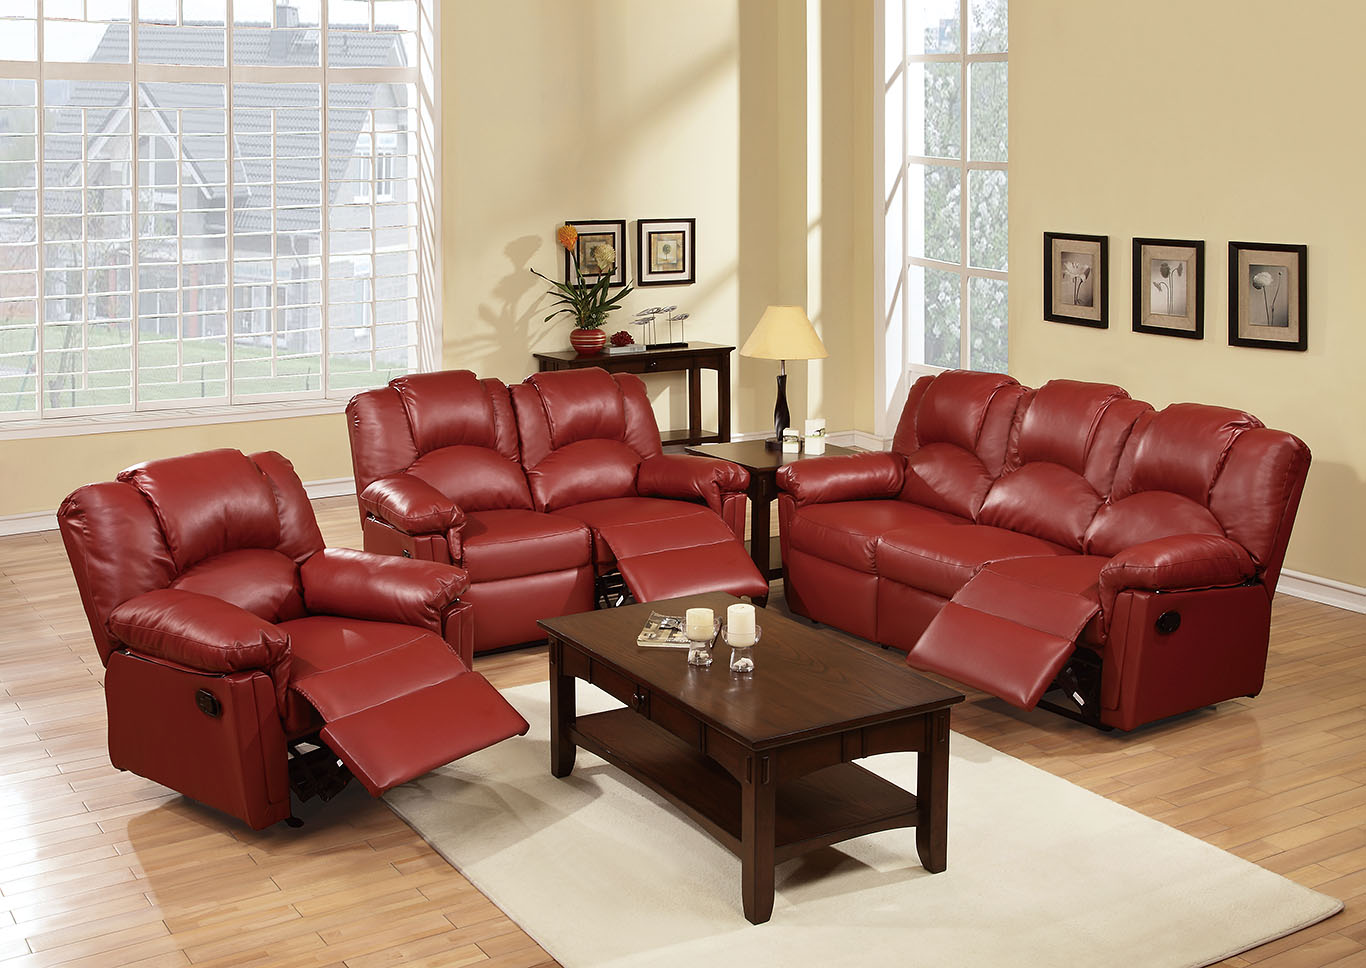 Recliner Sofa Jordan Home Furniture, Red Reclining Sofa Sets